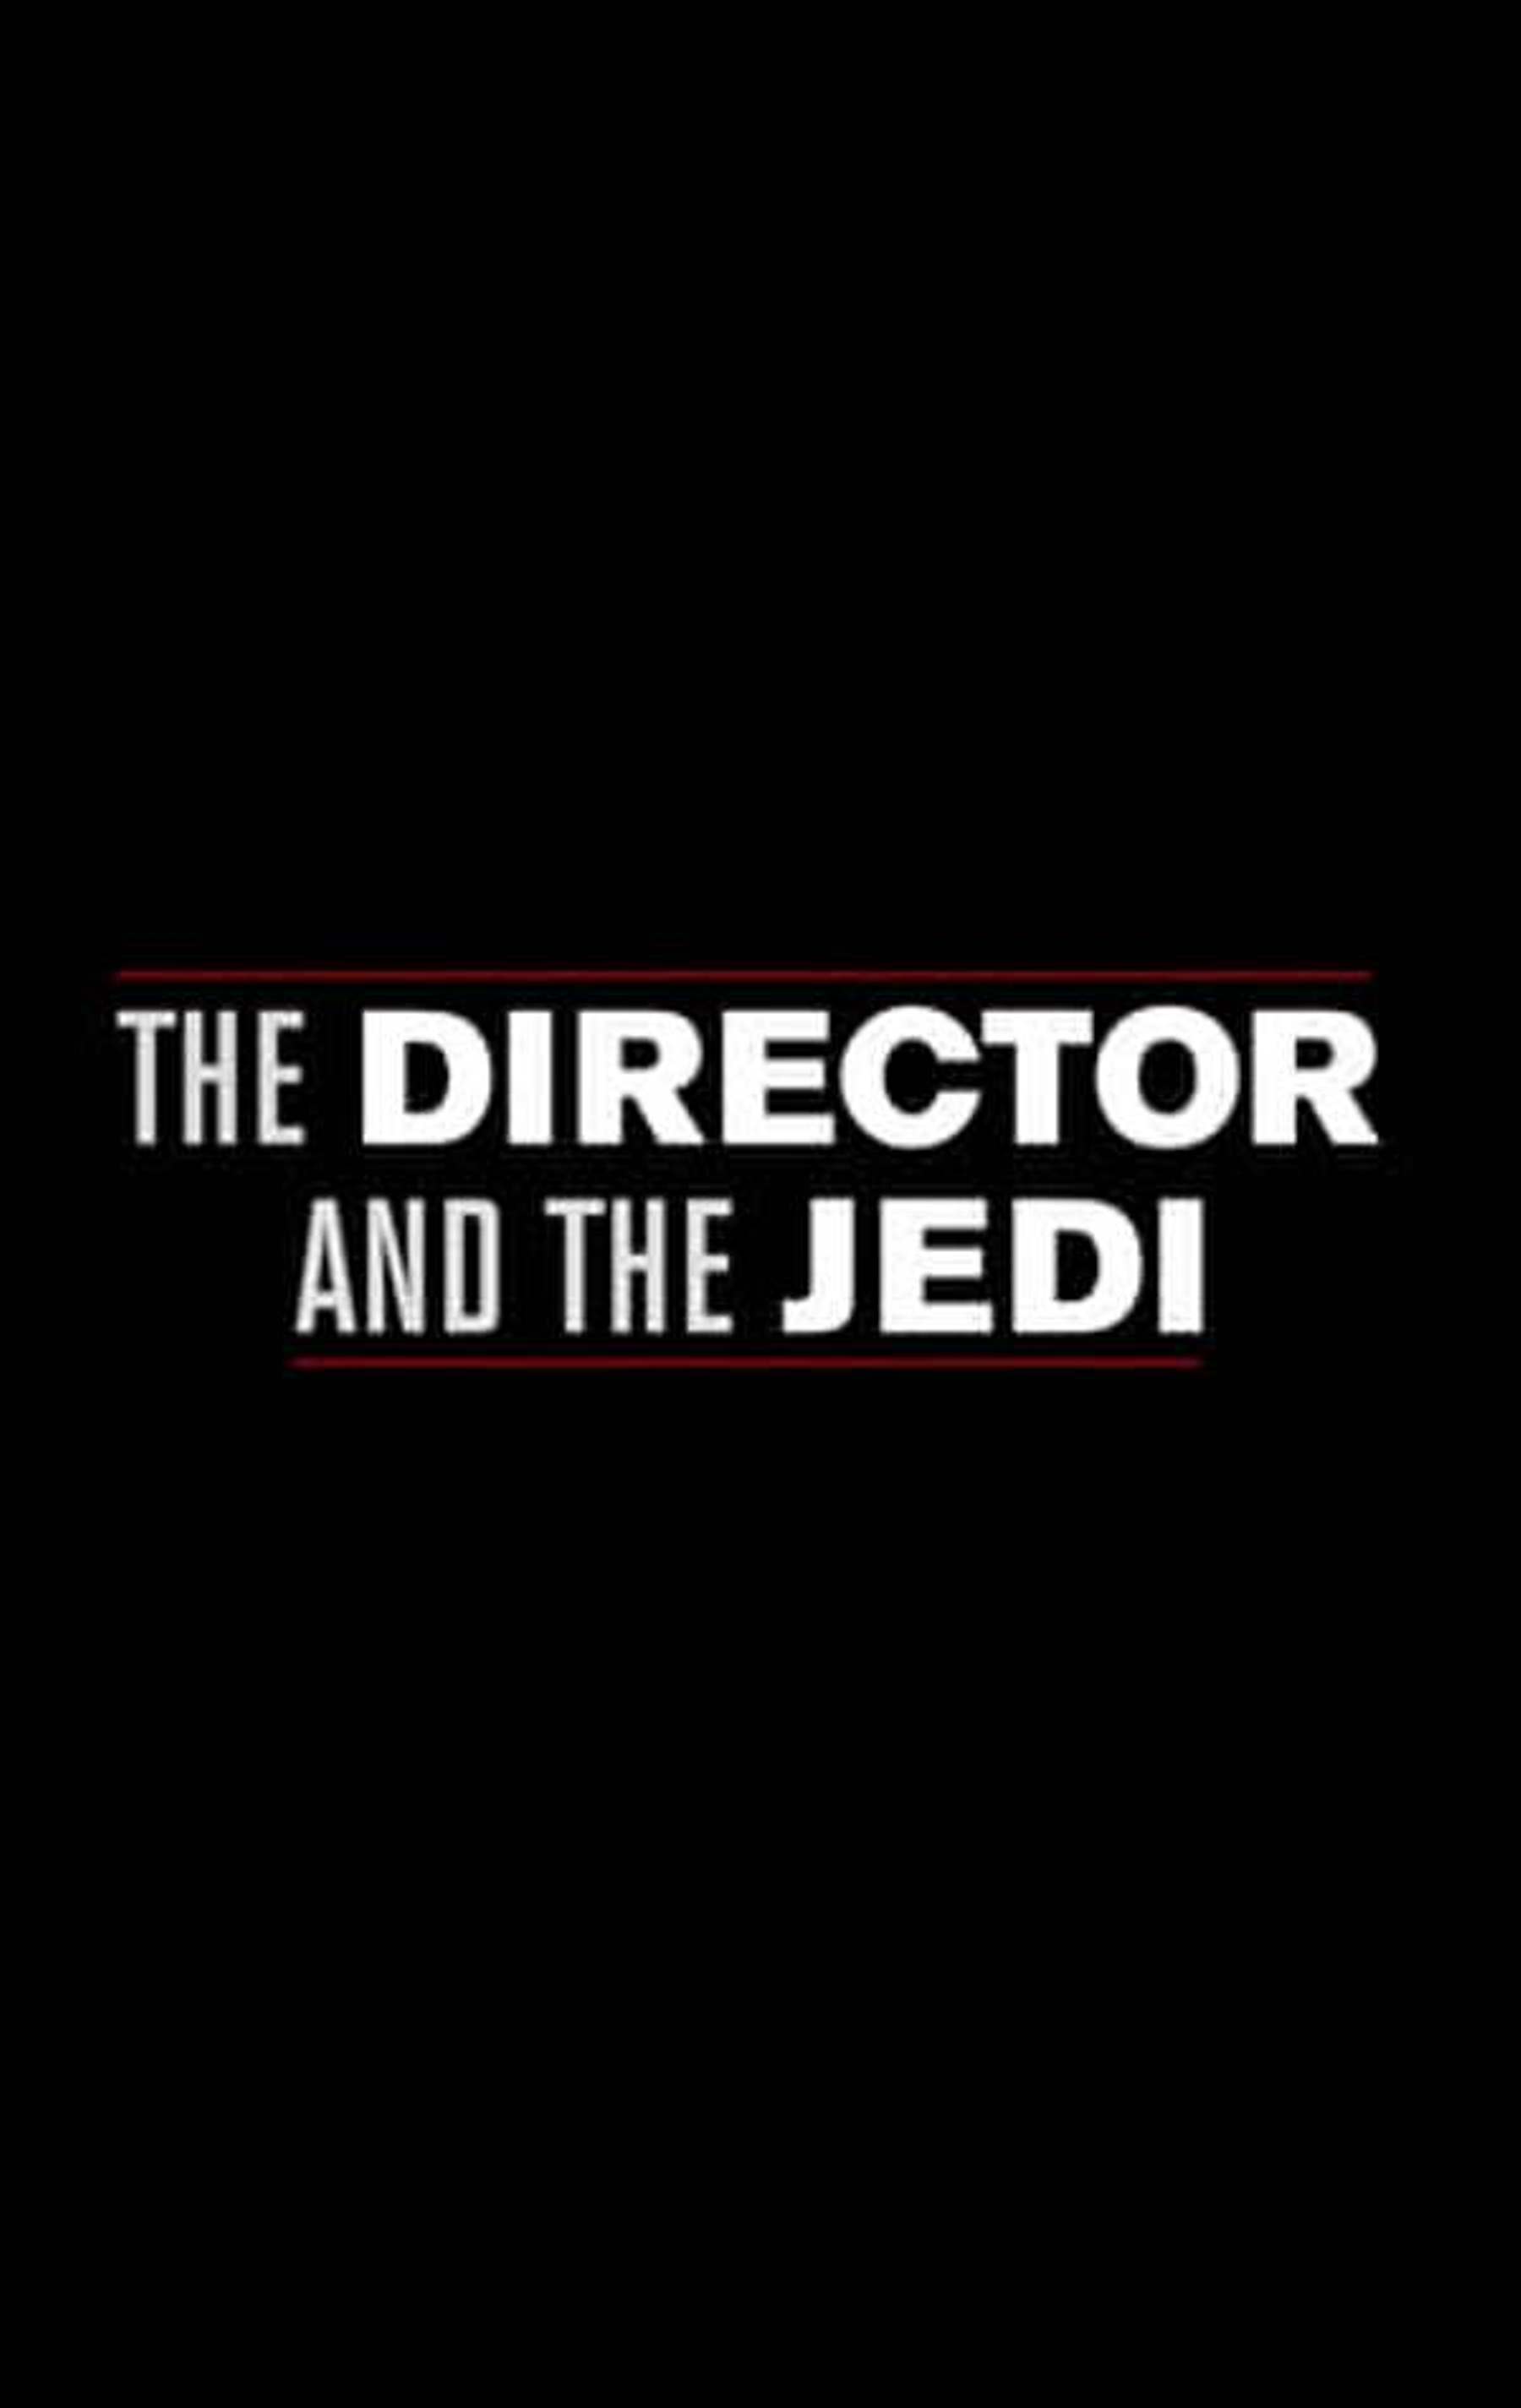 Nonton film The Director and The Jedi layarkaca21 indoxx1 ganool online streaming terbaru